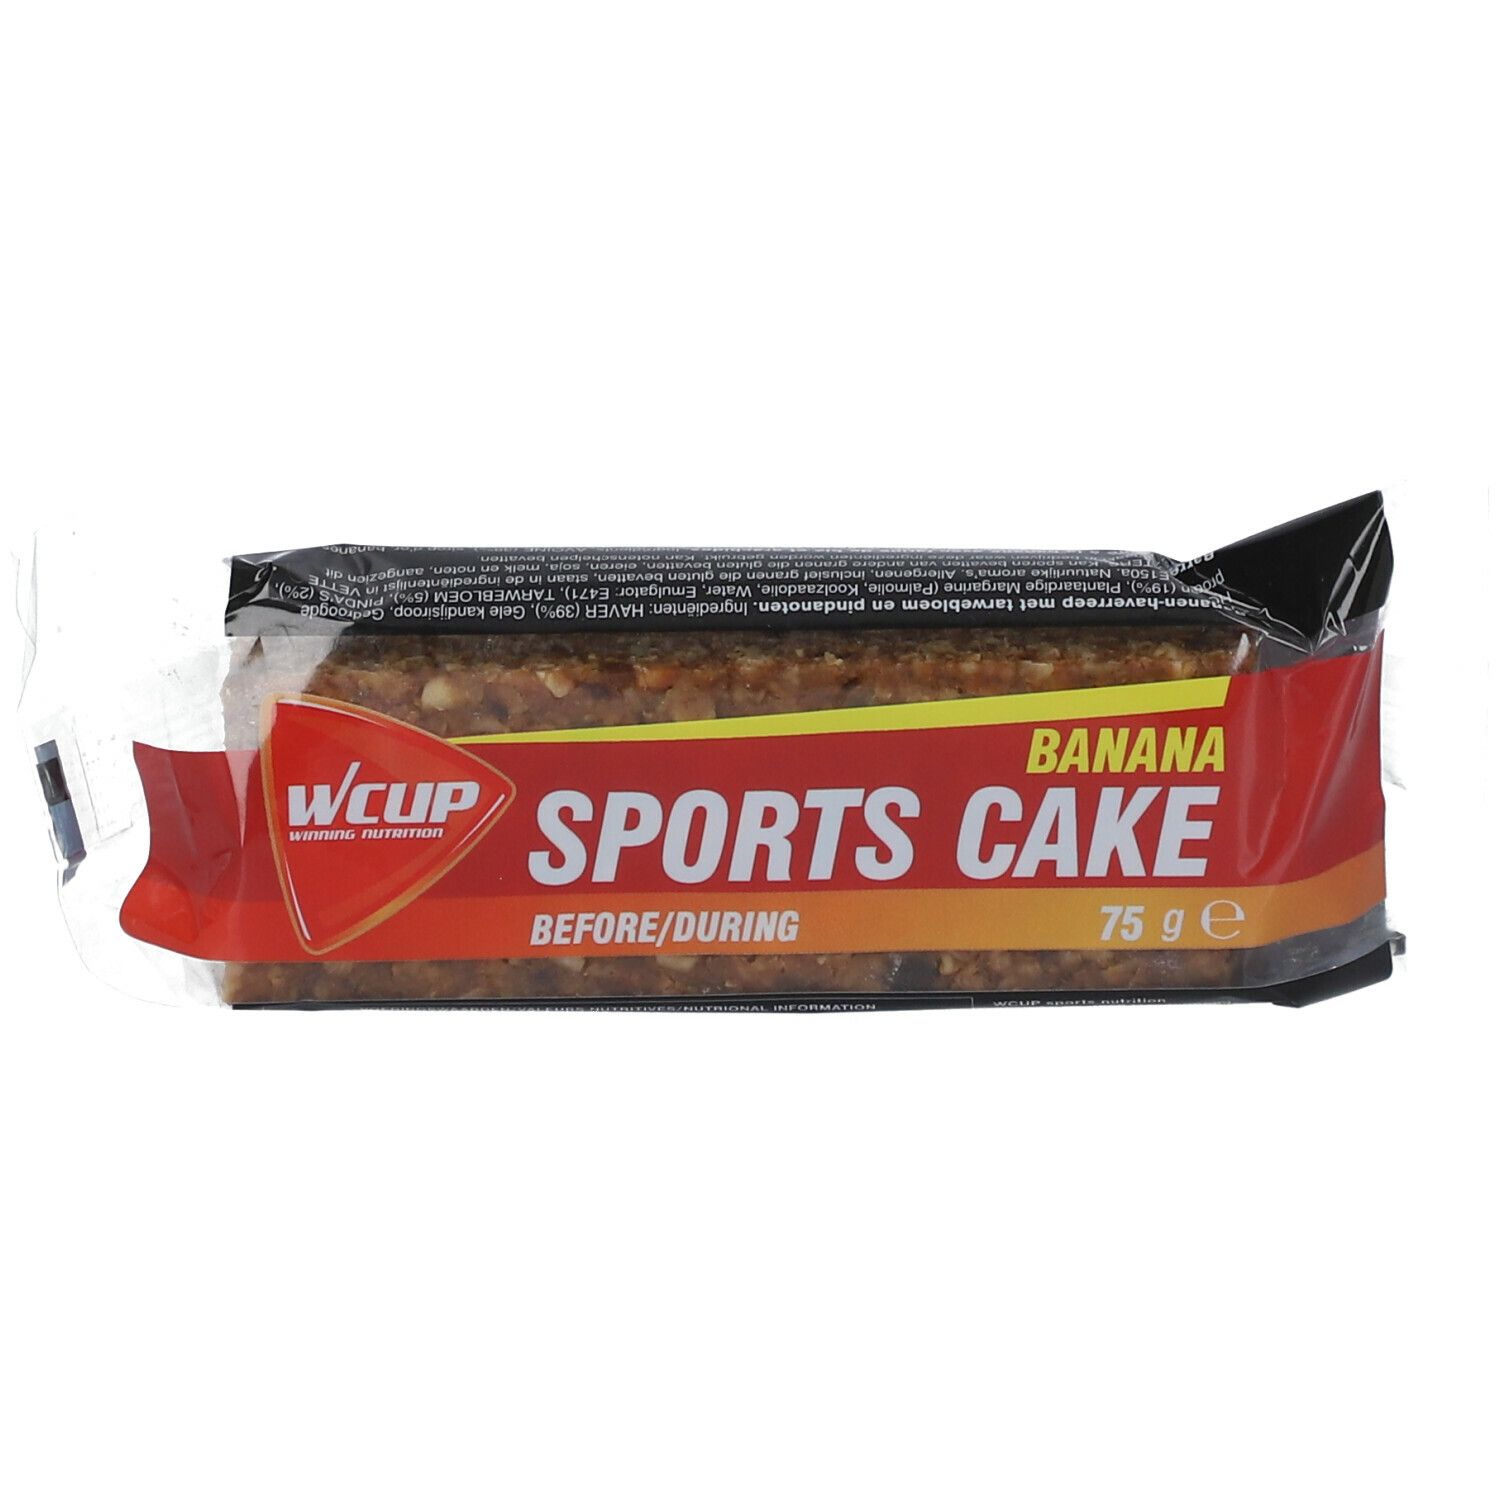 WCUP Sports Cake Banana